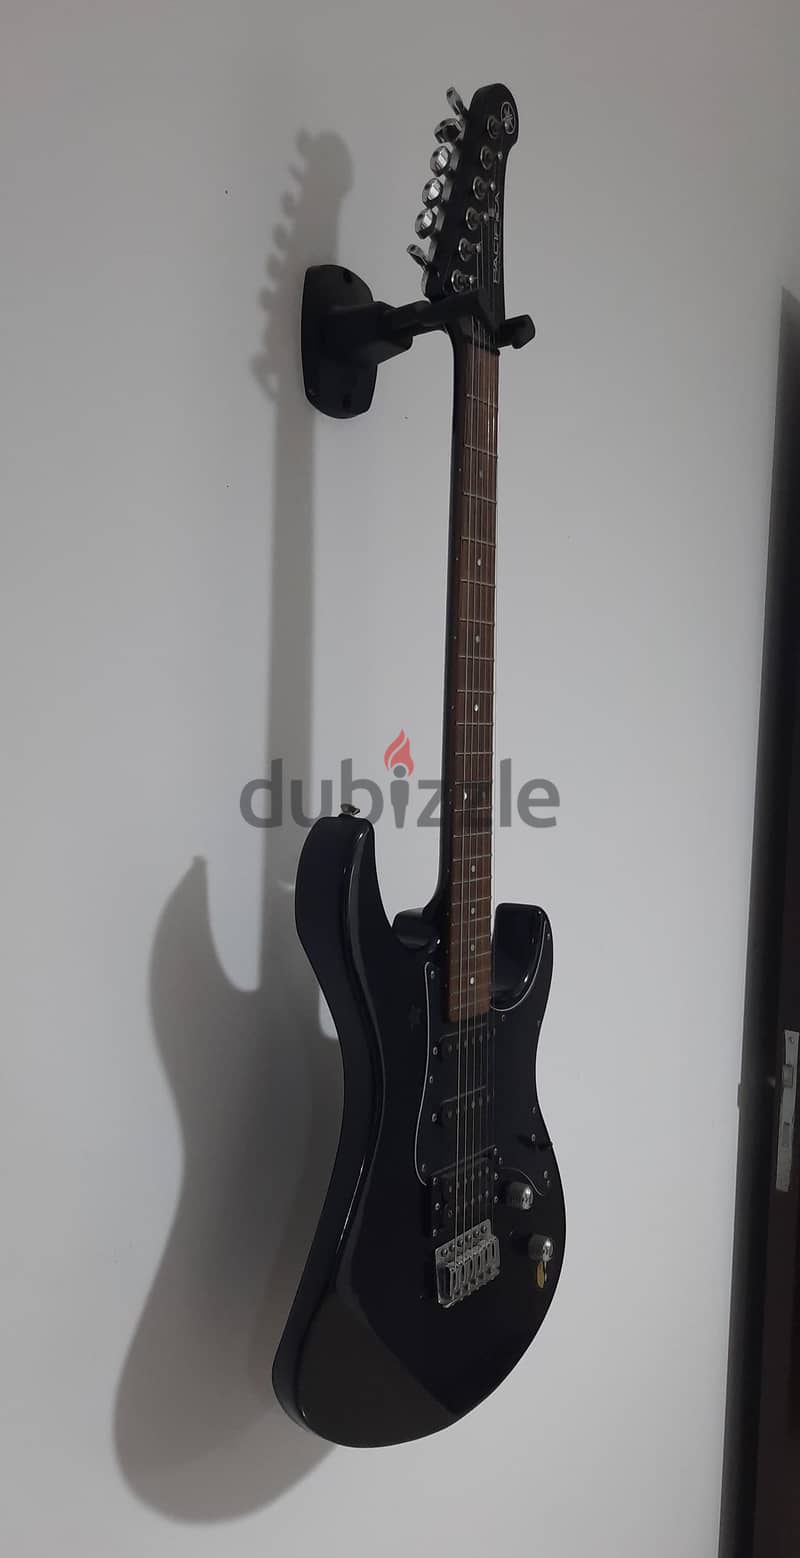 Yamaha pacifica guitar abd Fender amplifier 6